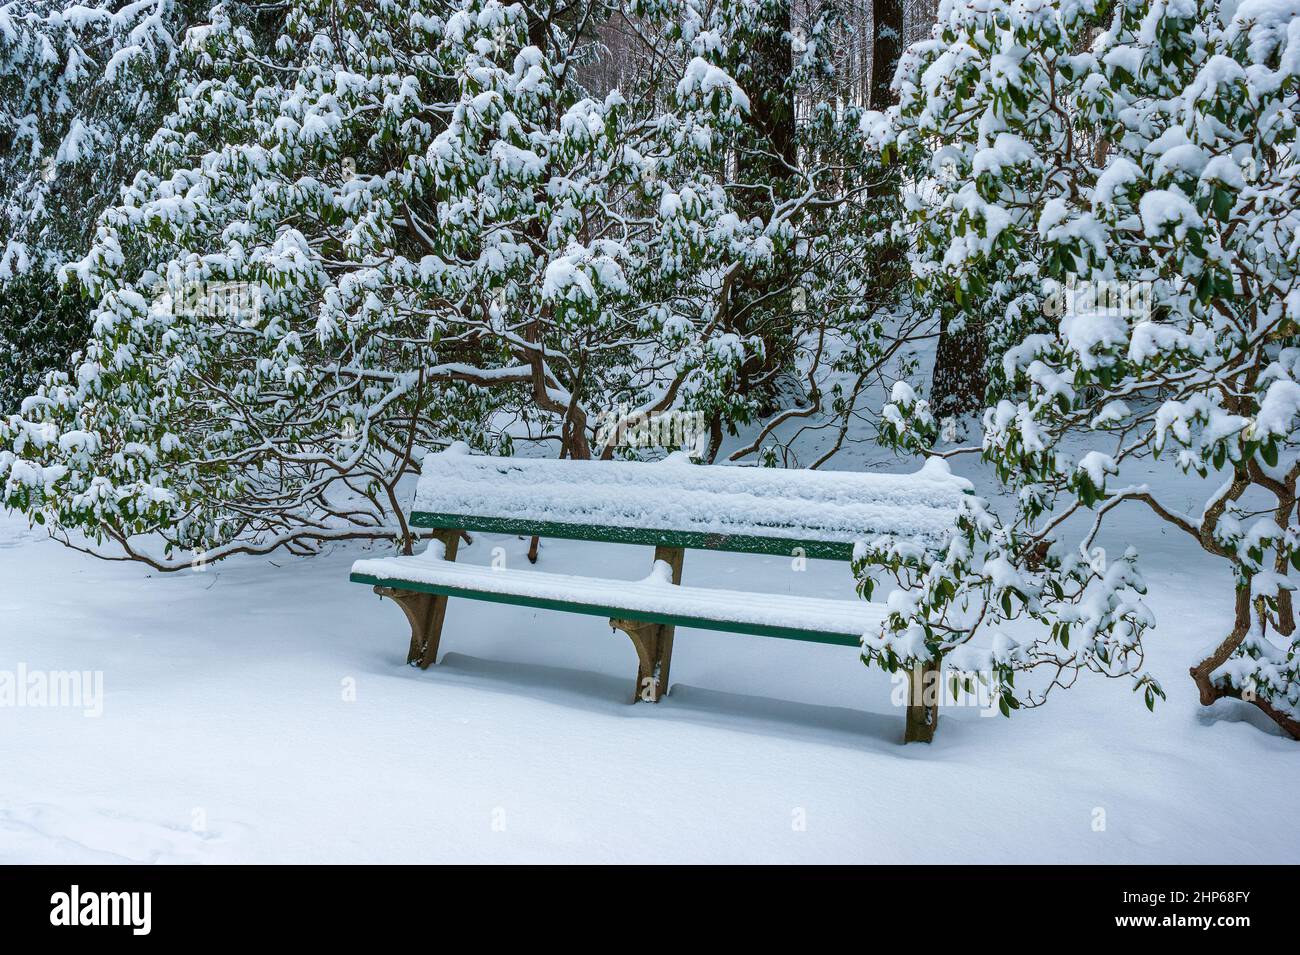 A snow-covered park bench among mountain laurel shrubs (Kalmia latifolia). Arnold Arboretum of Harvard University, Boston, Massachusetts Stock Photo